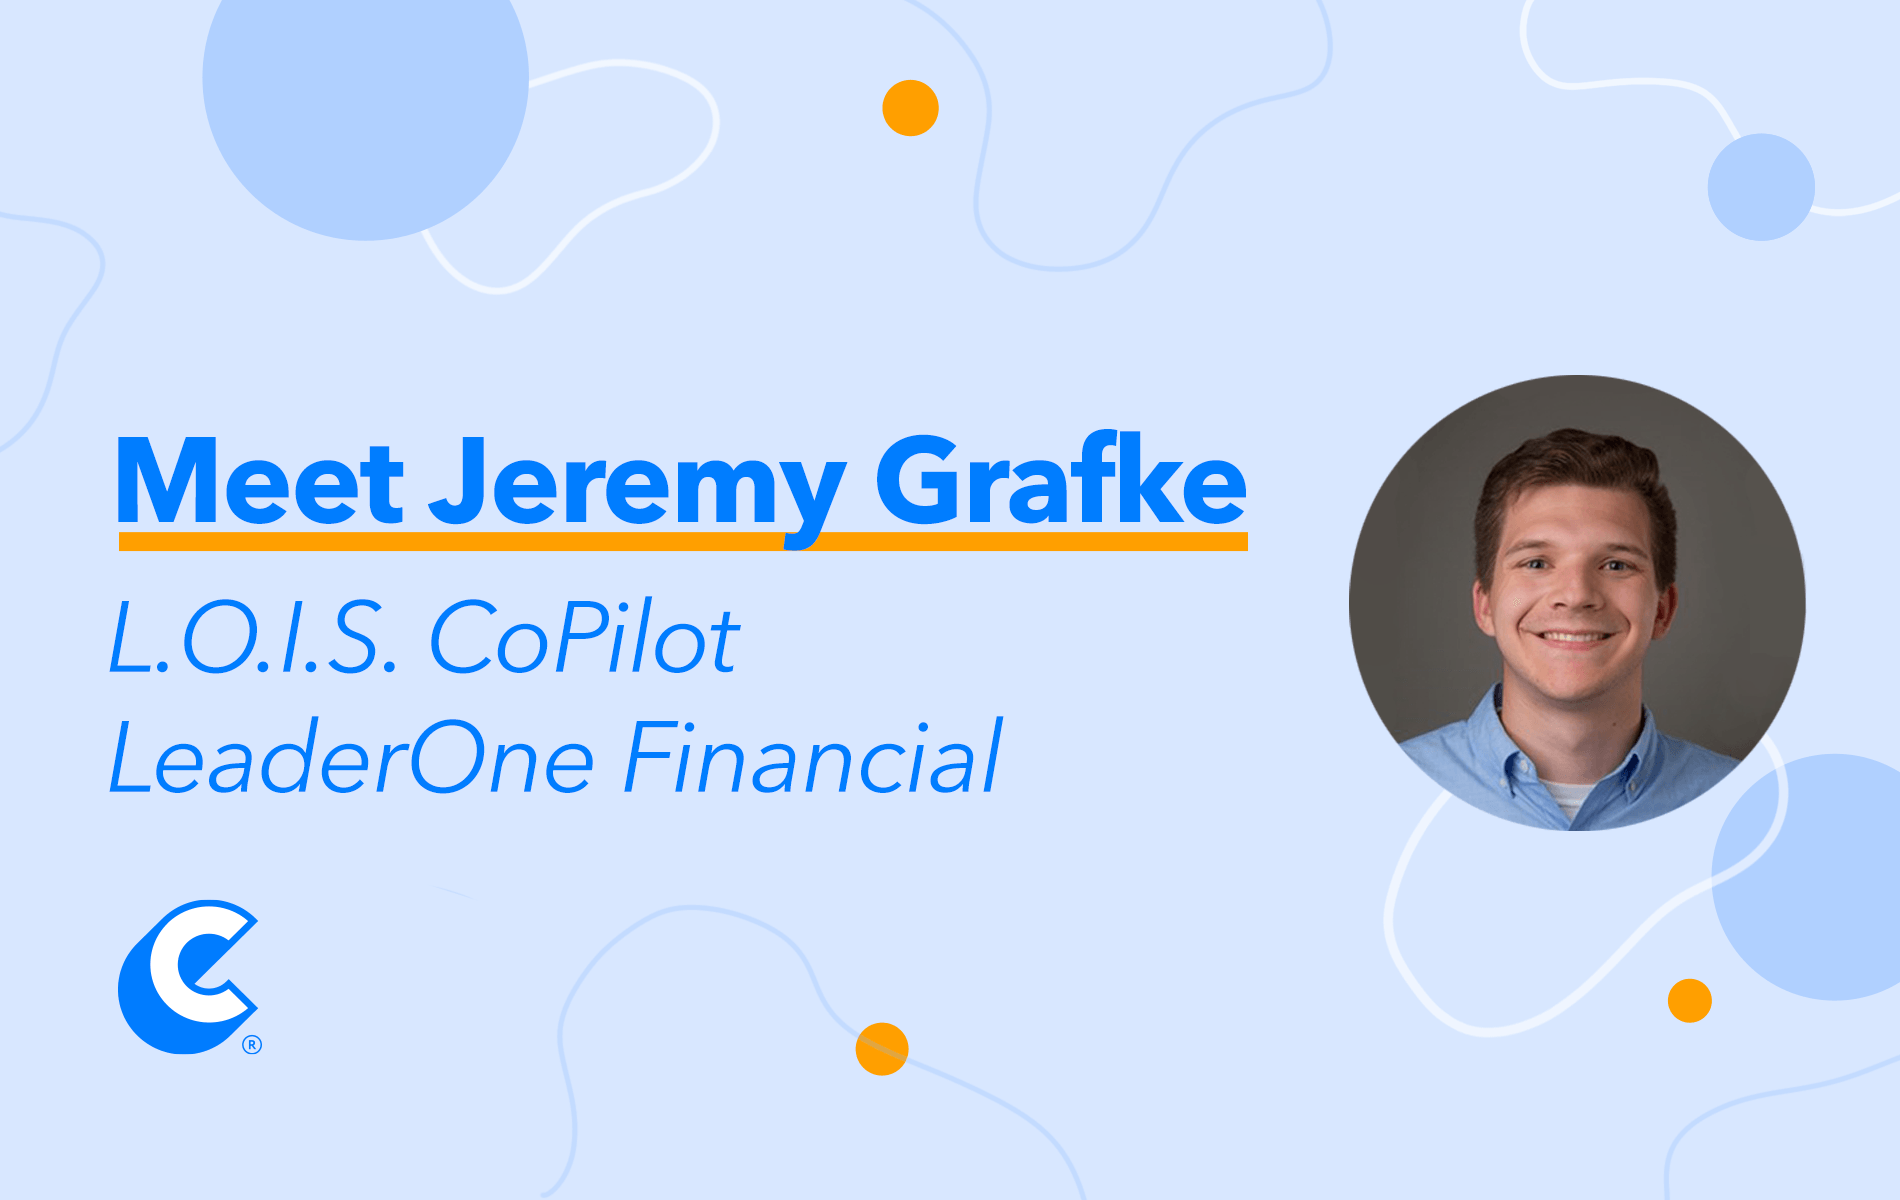 Meet Jeremy Grafke: L.O.I.S. CoPilot at LeaderOne Financial